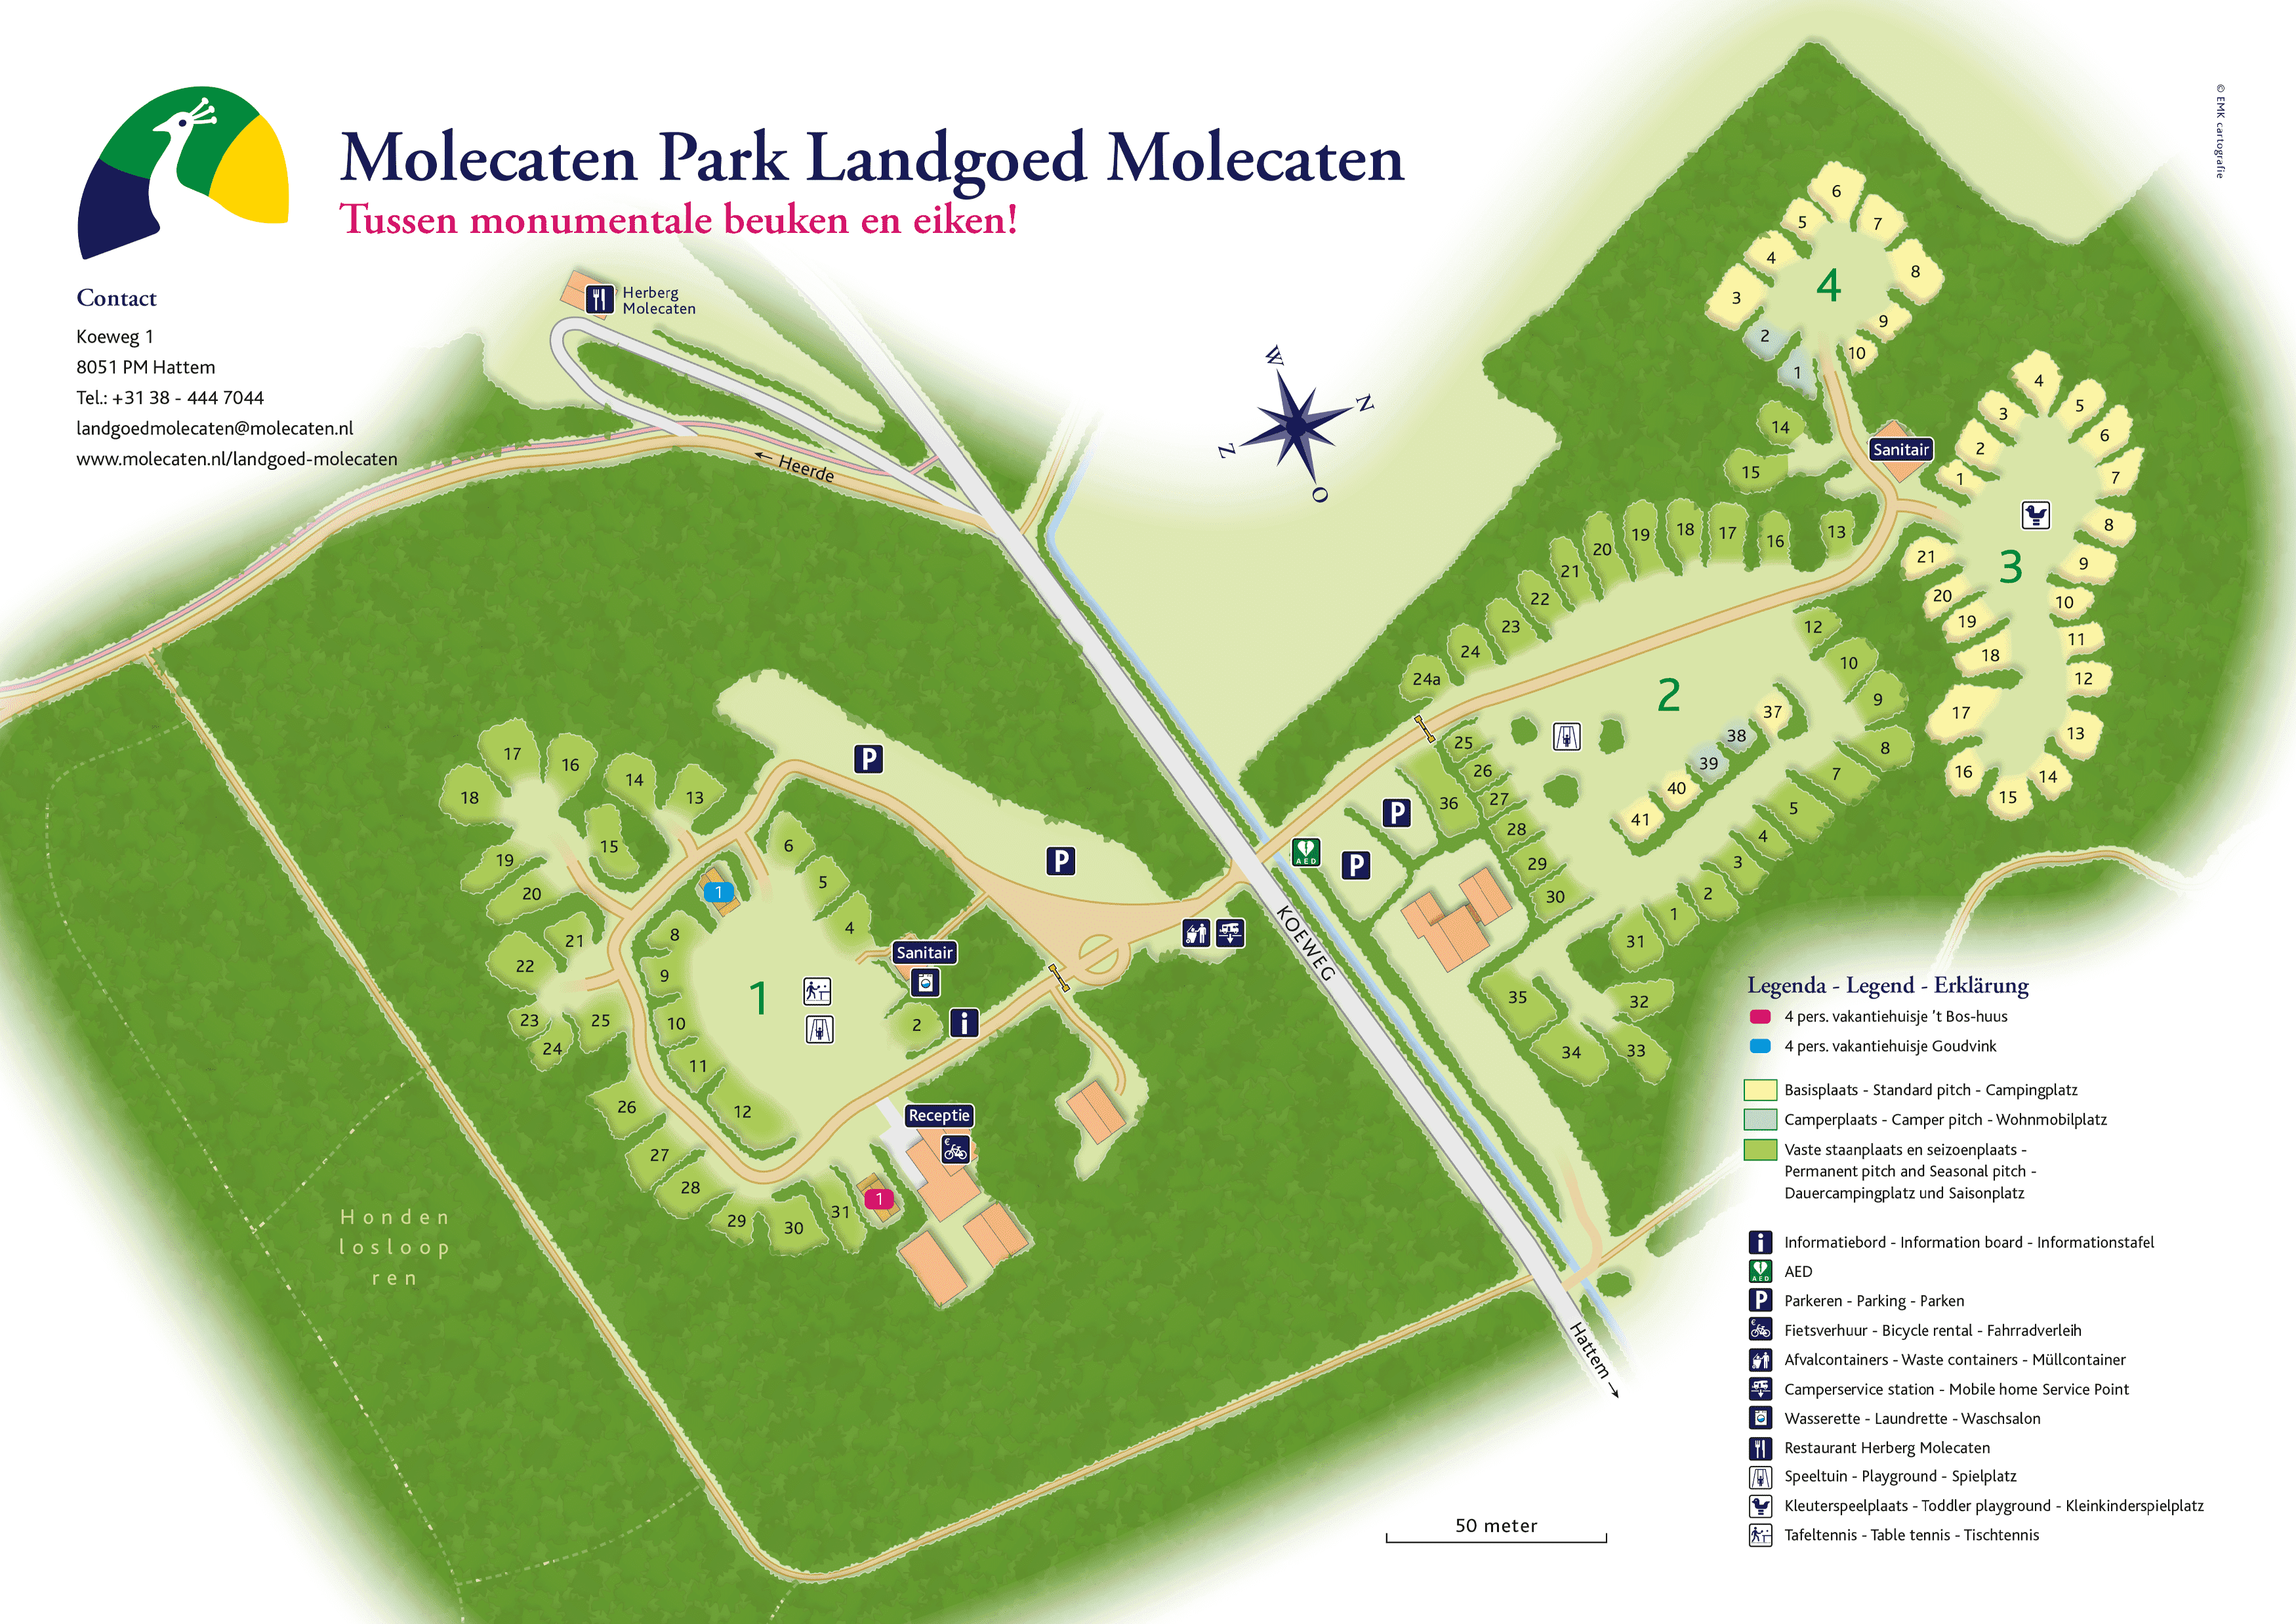 Molecaten Park Landgoed Molecaten accommodation.parkmap.alttext